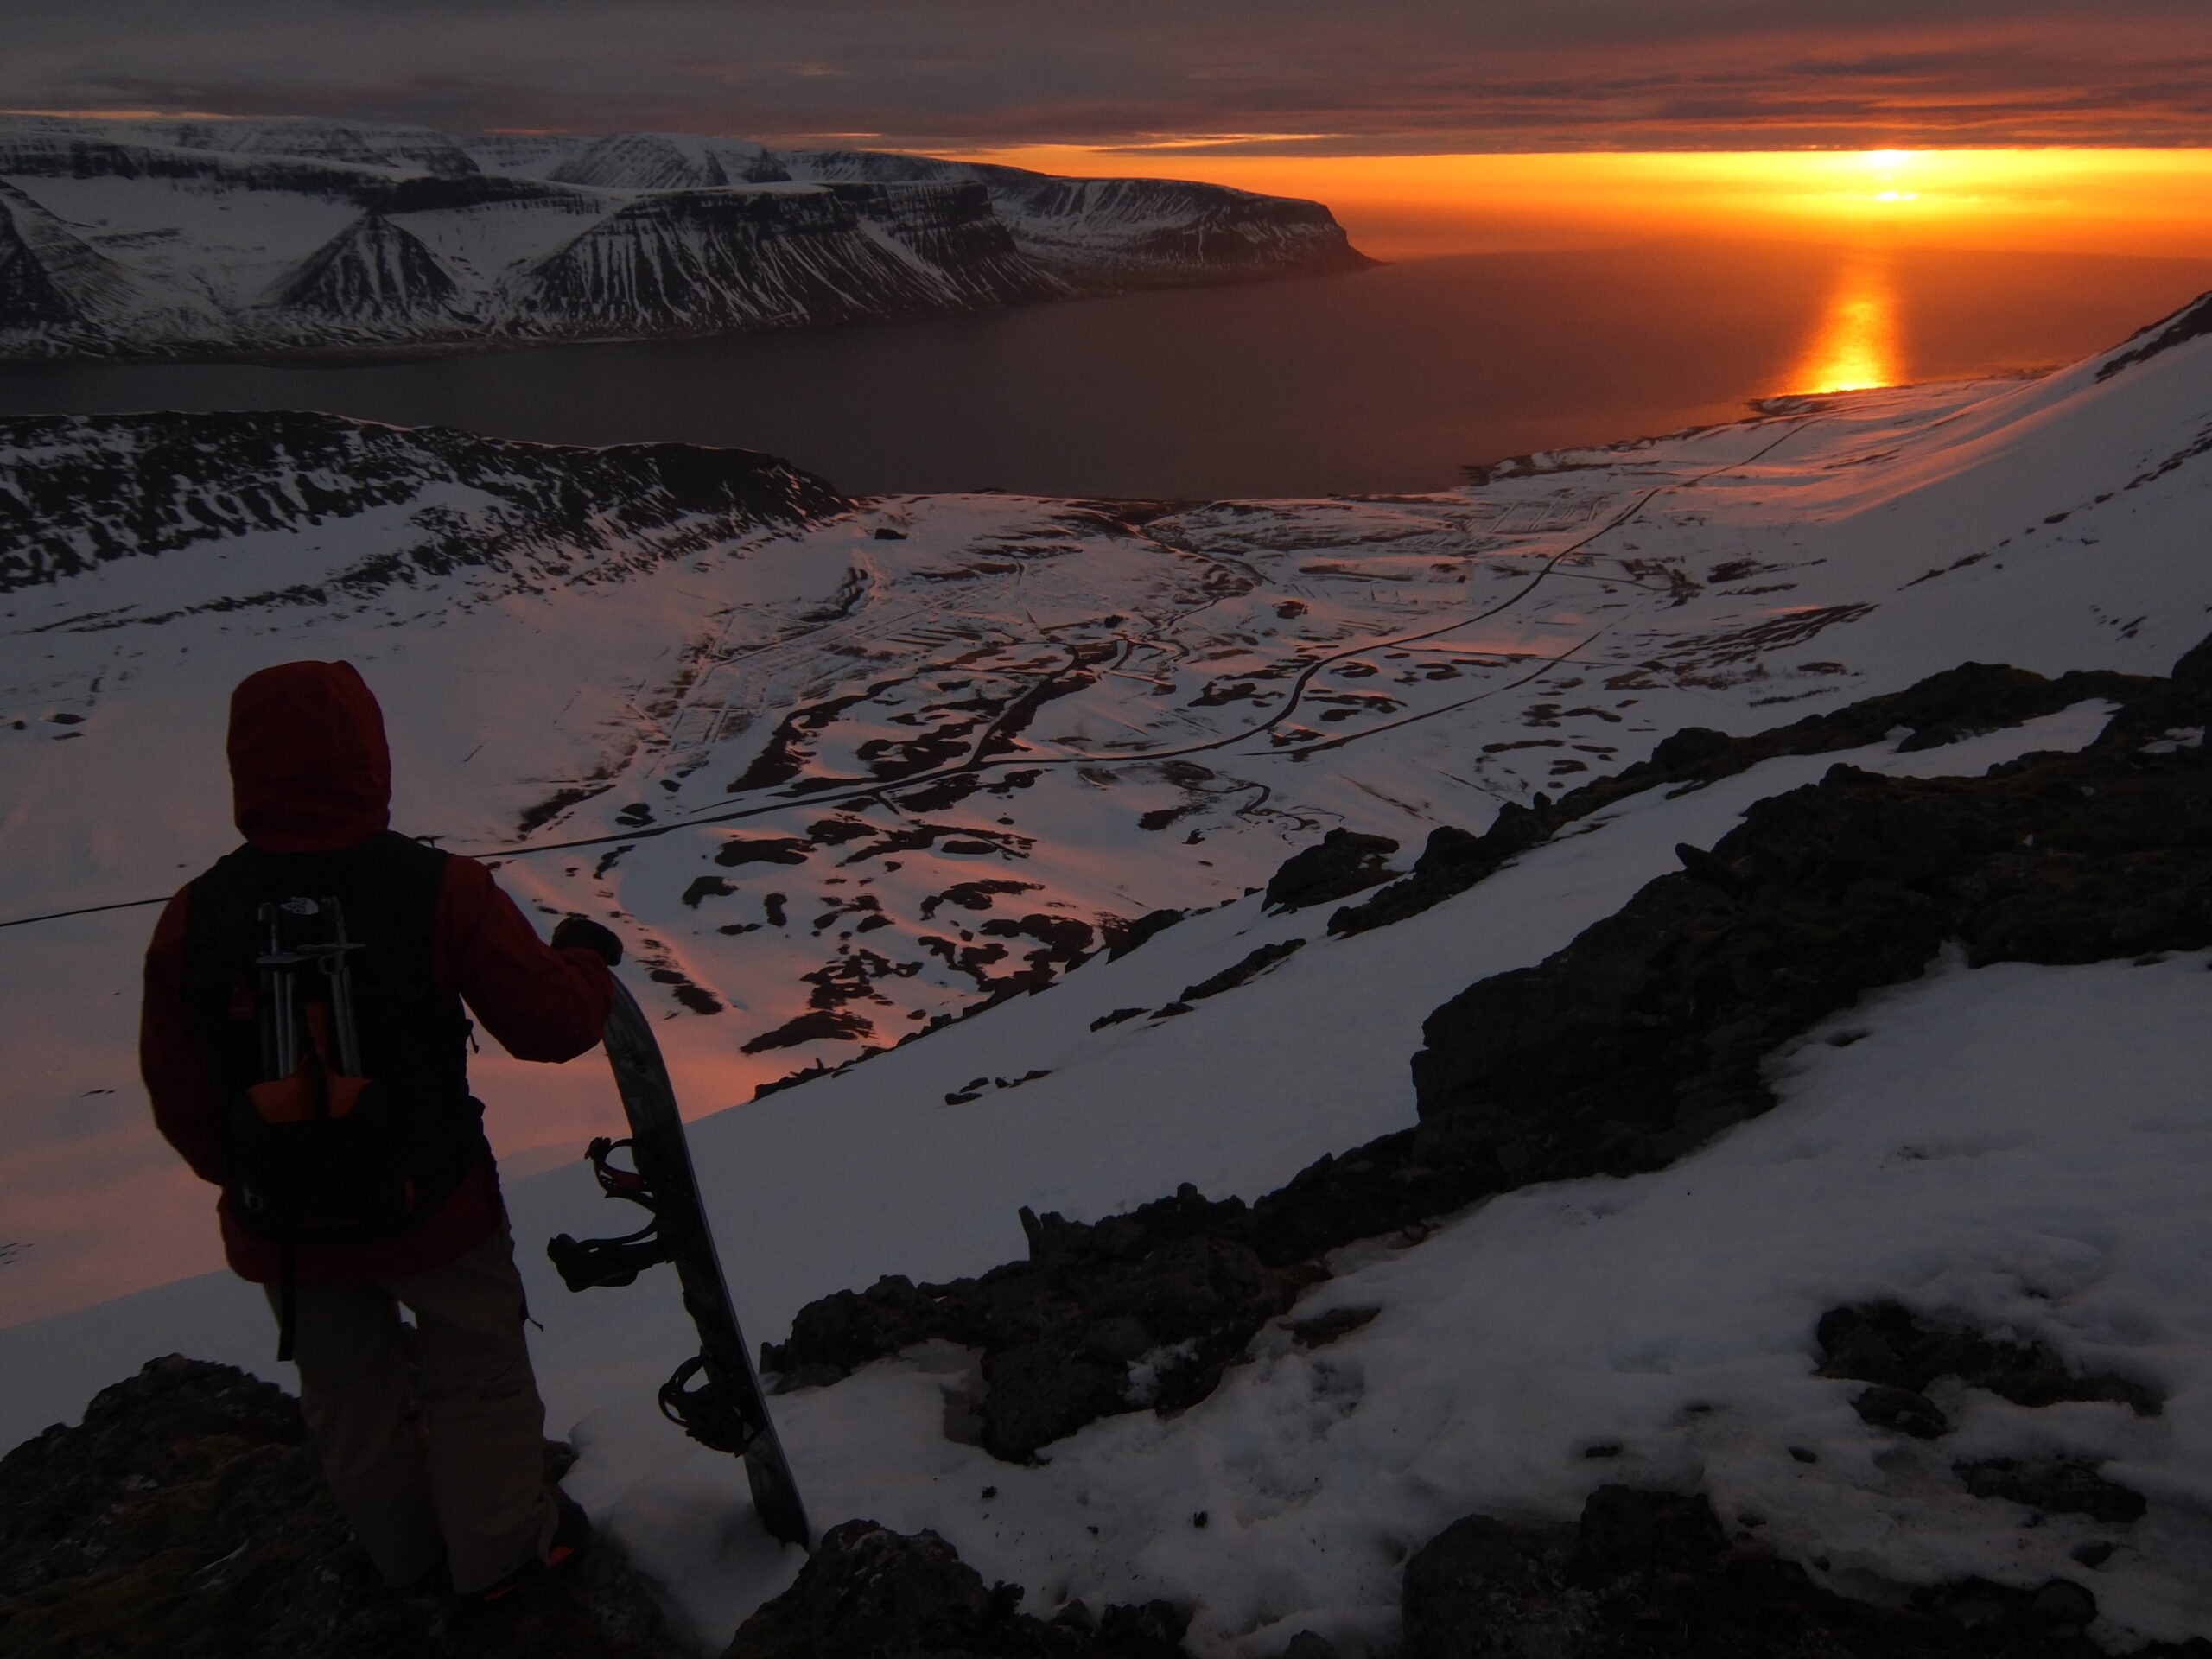 An epic sunset while standing on a summit with Dýrafjörður below us